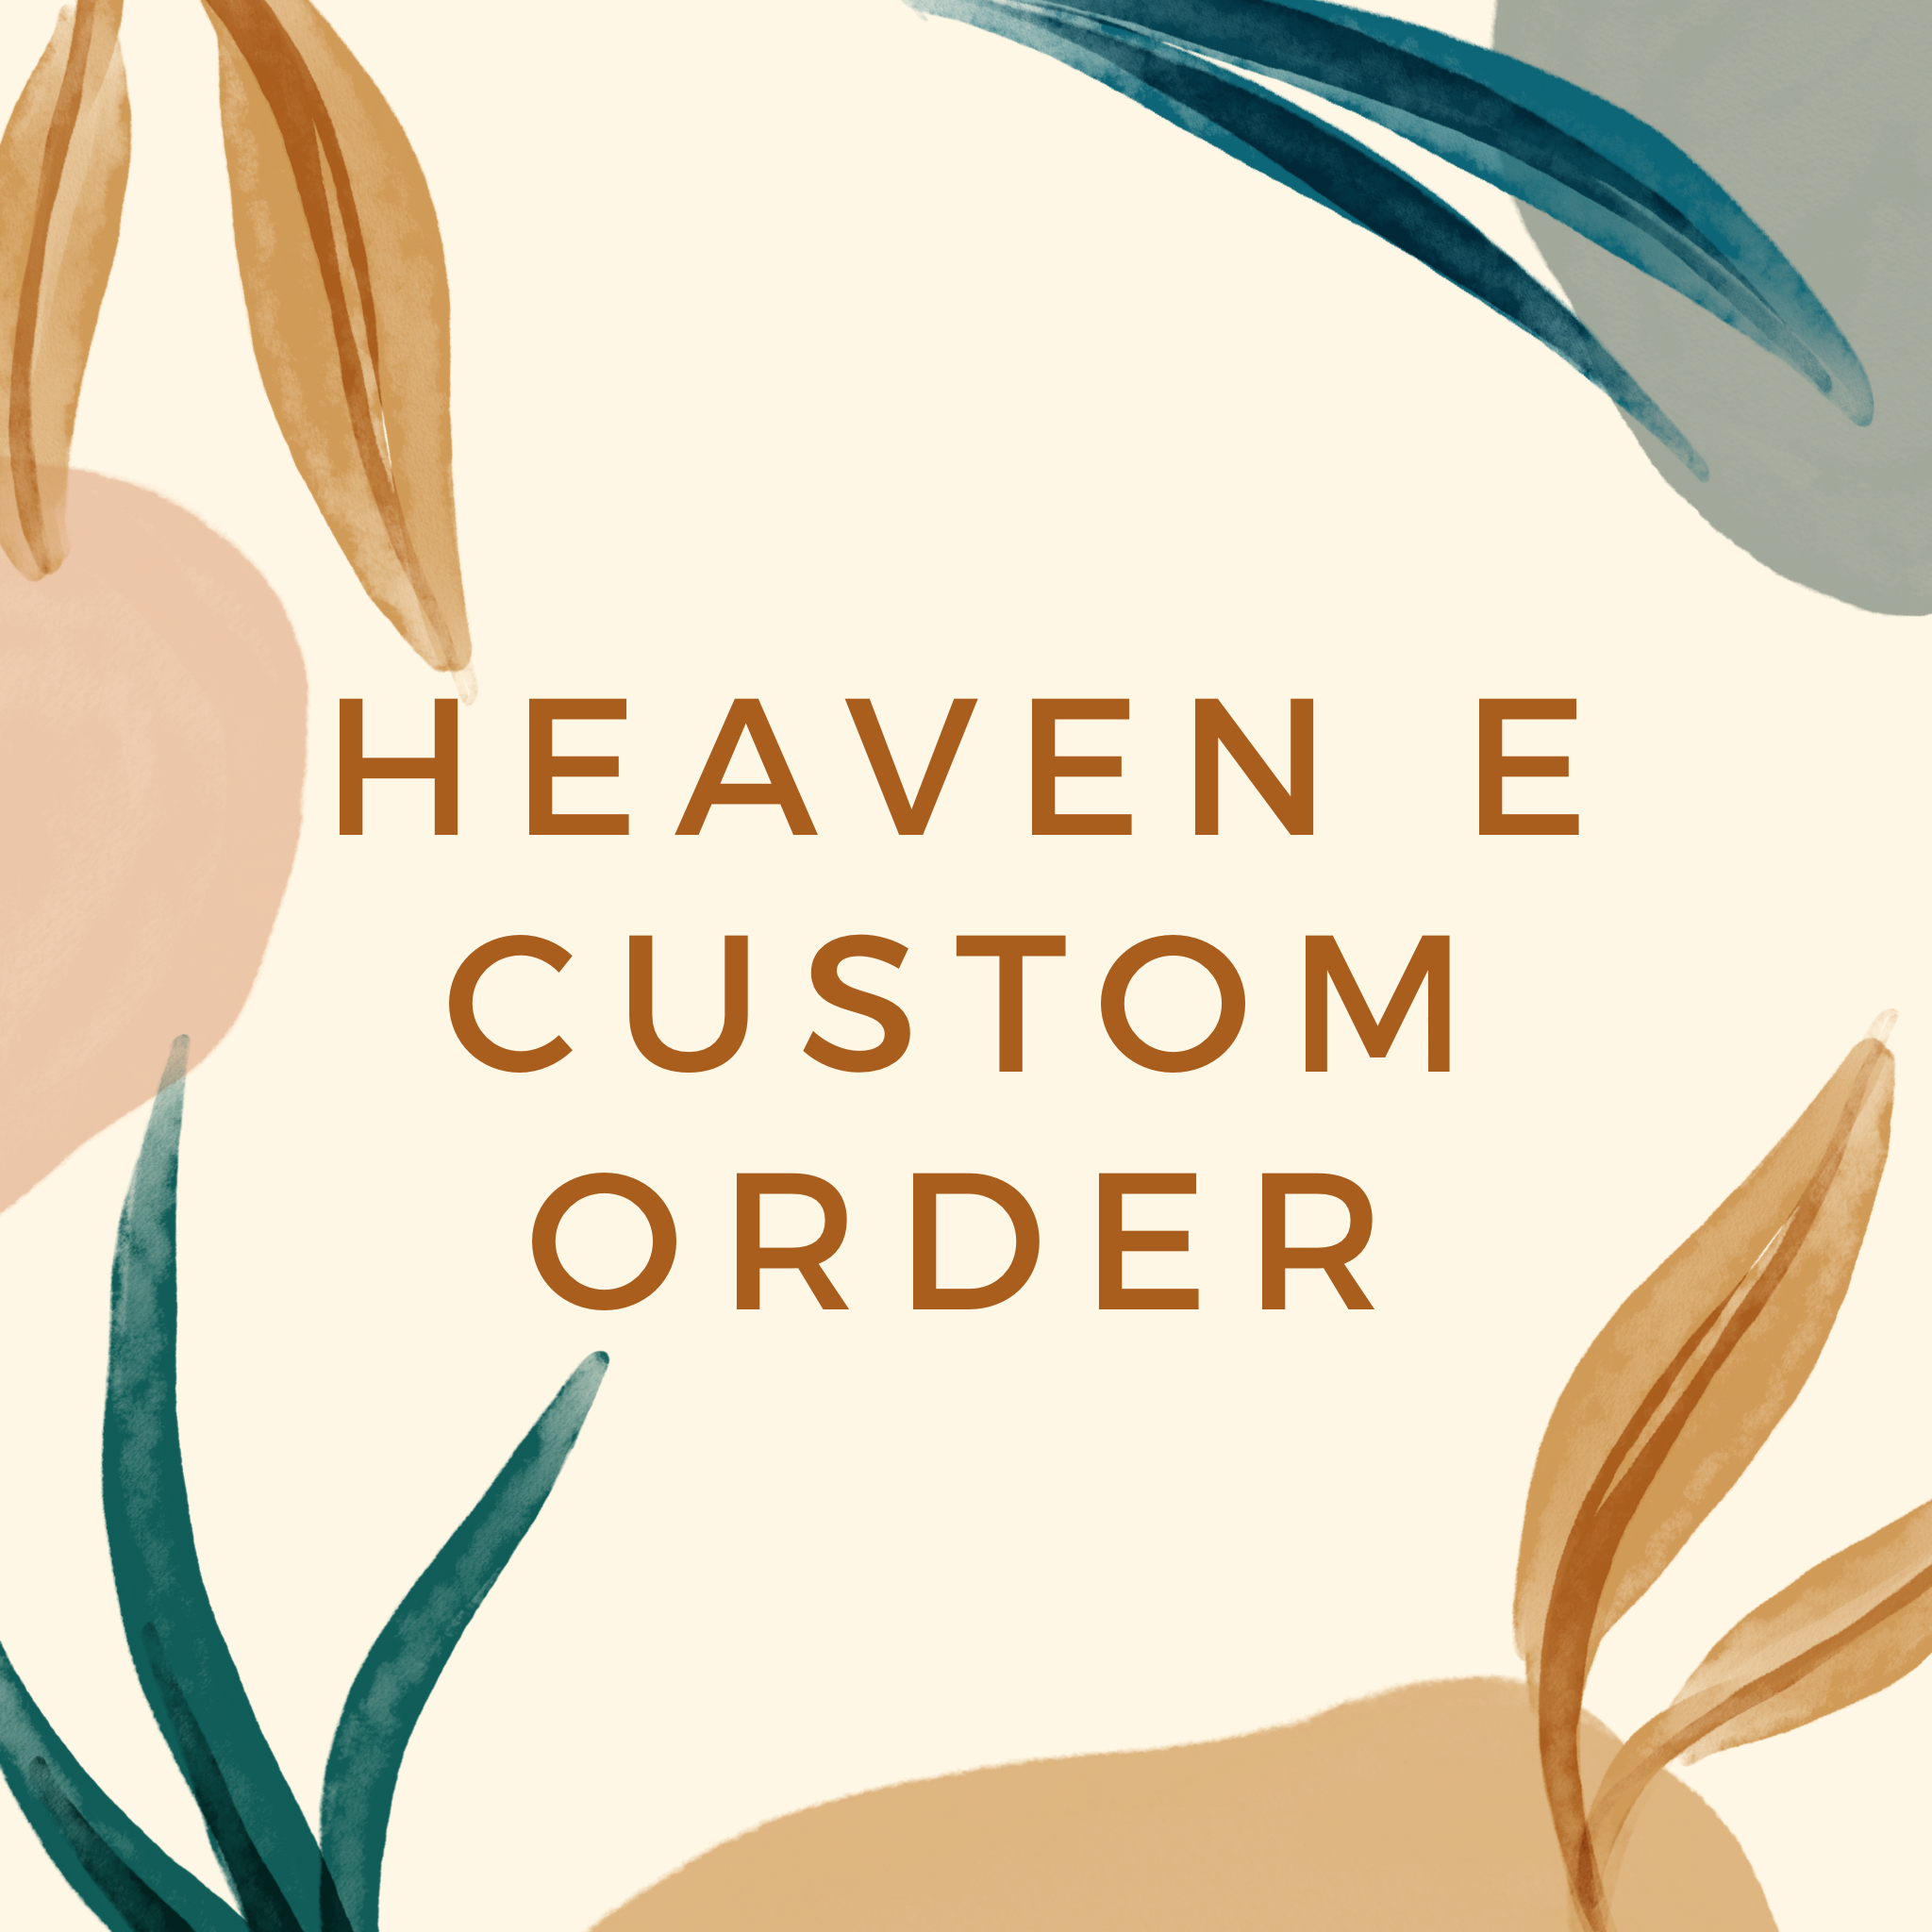 Heaven E Custom Order